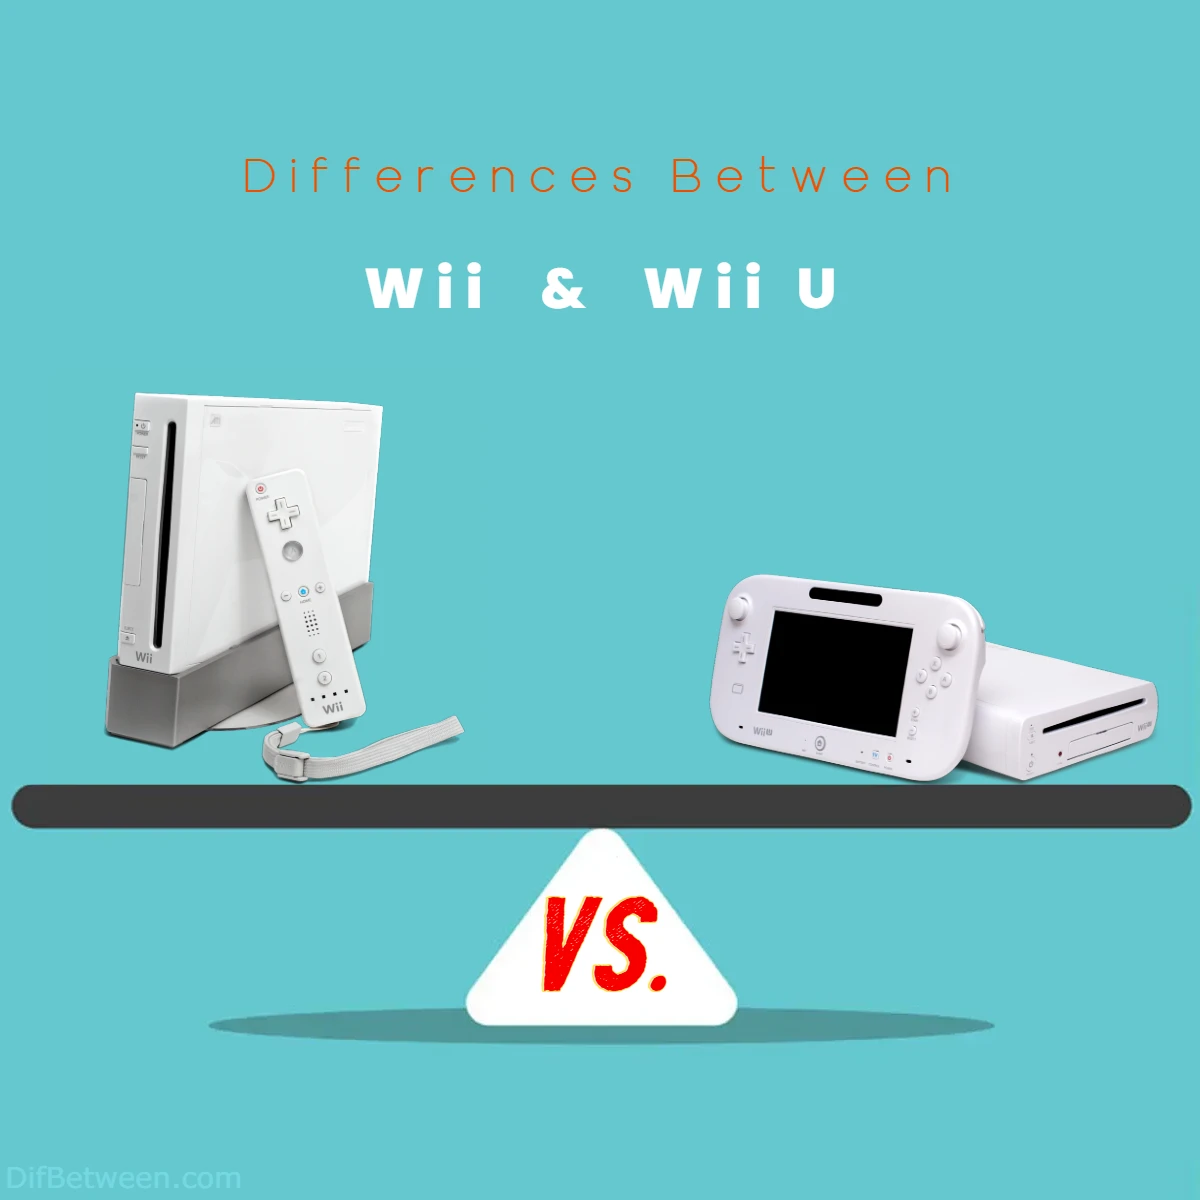 Differences Between Wii vs Wii U